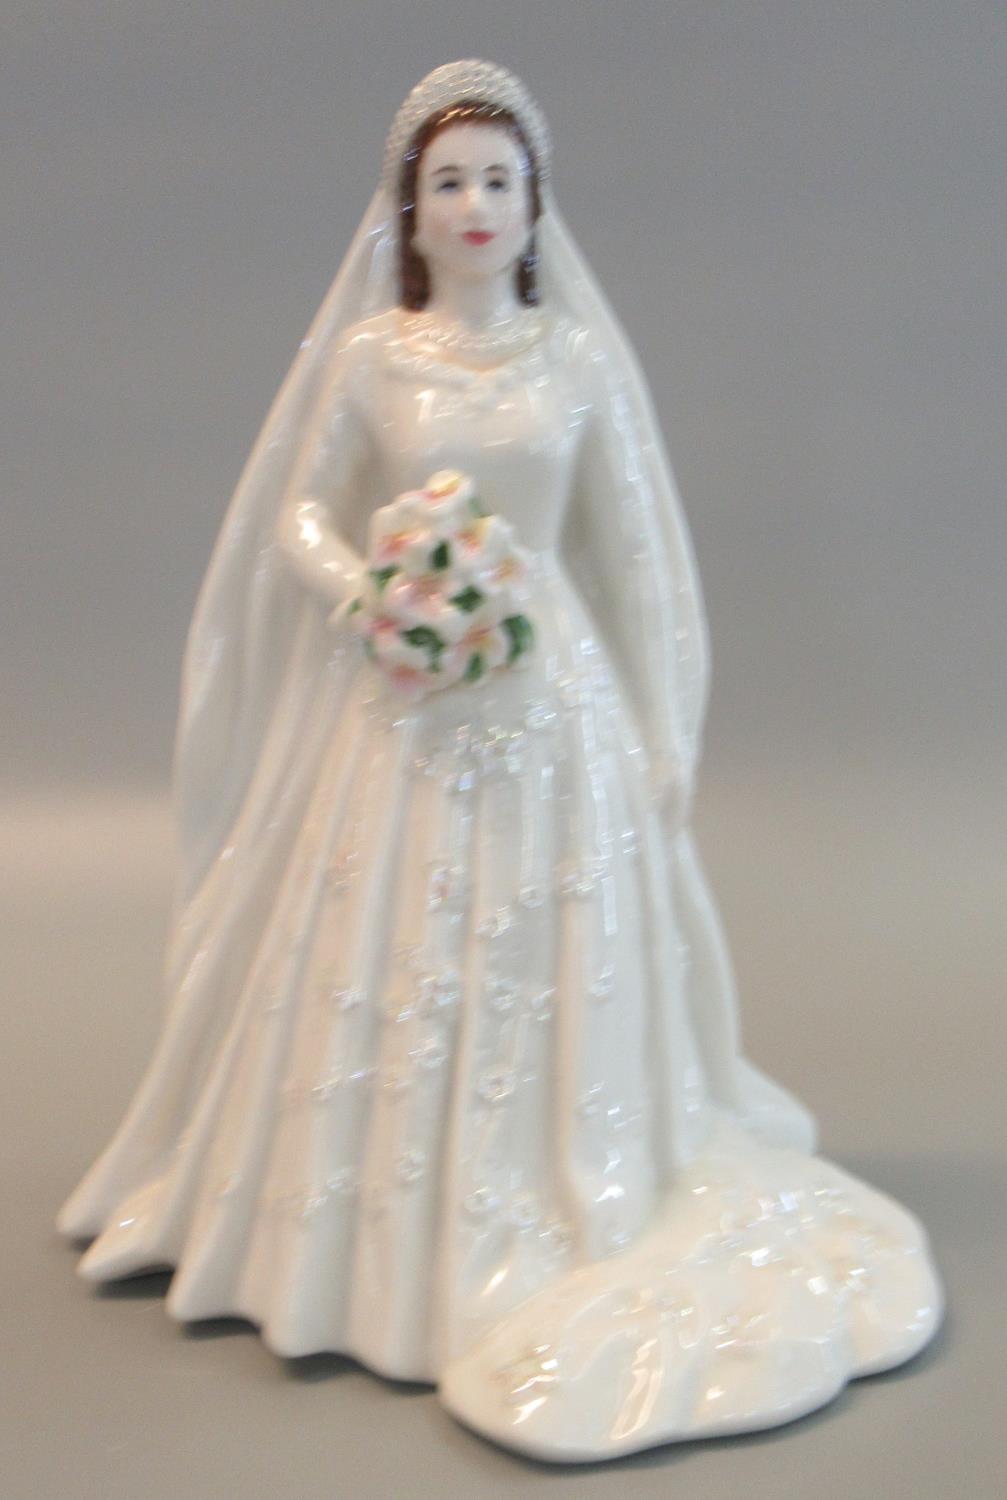 Royal Worcester porcelain figurine 'Her Majesty Queen Elizabeth II', Diamond Wedding Anniversary